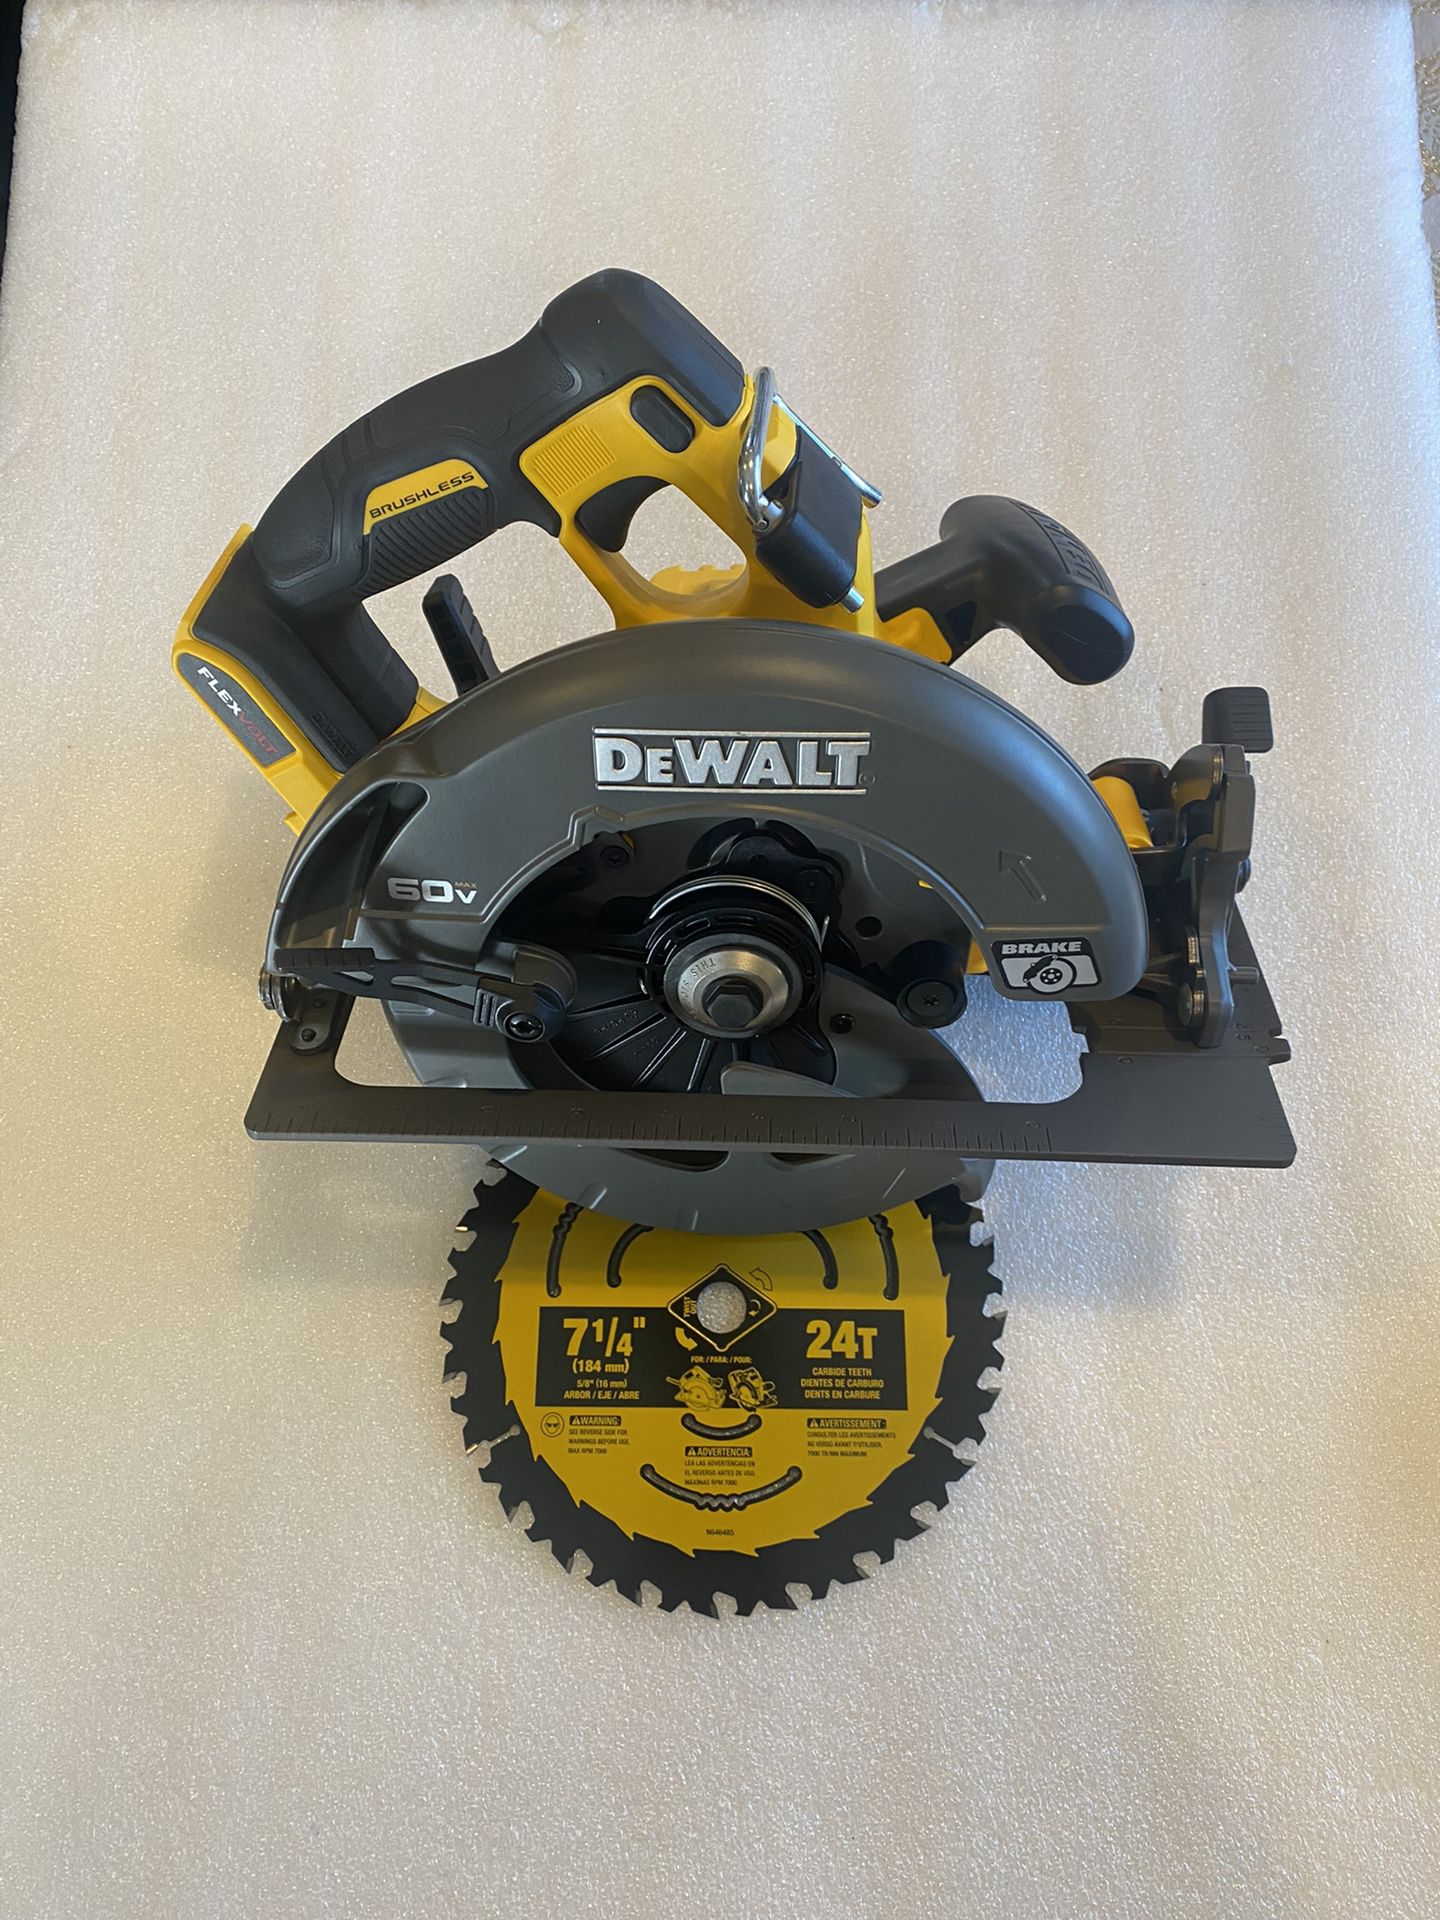 New Dewalt Flexvolt 60v 7-1/4” Circular Saw. TOOL ONLY $130